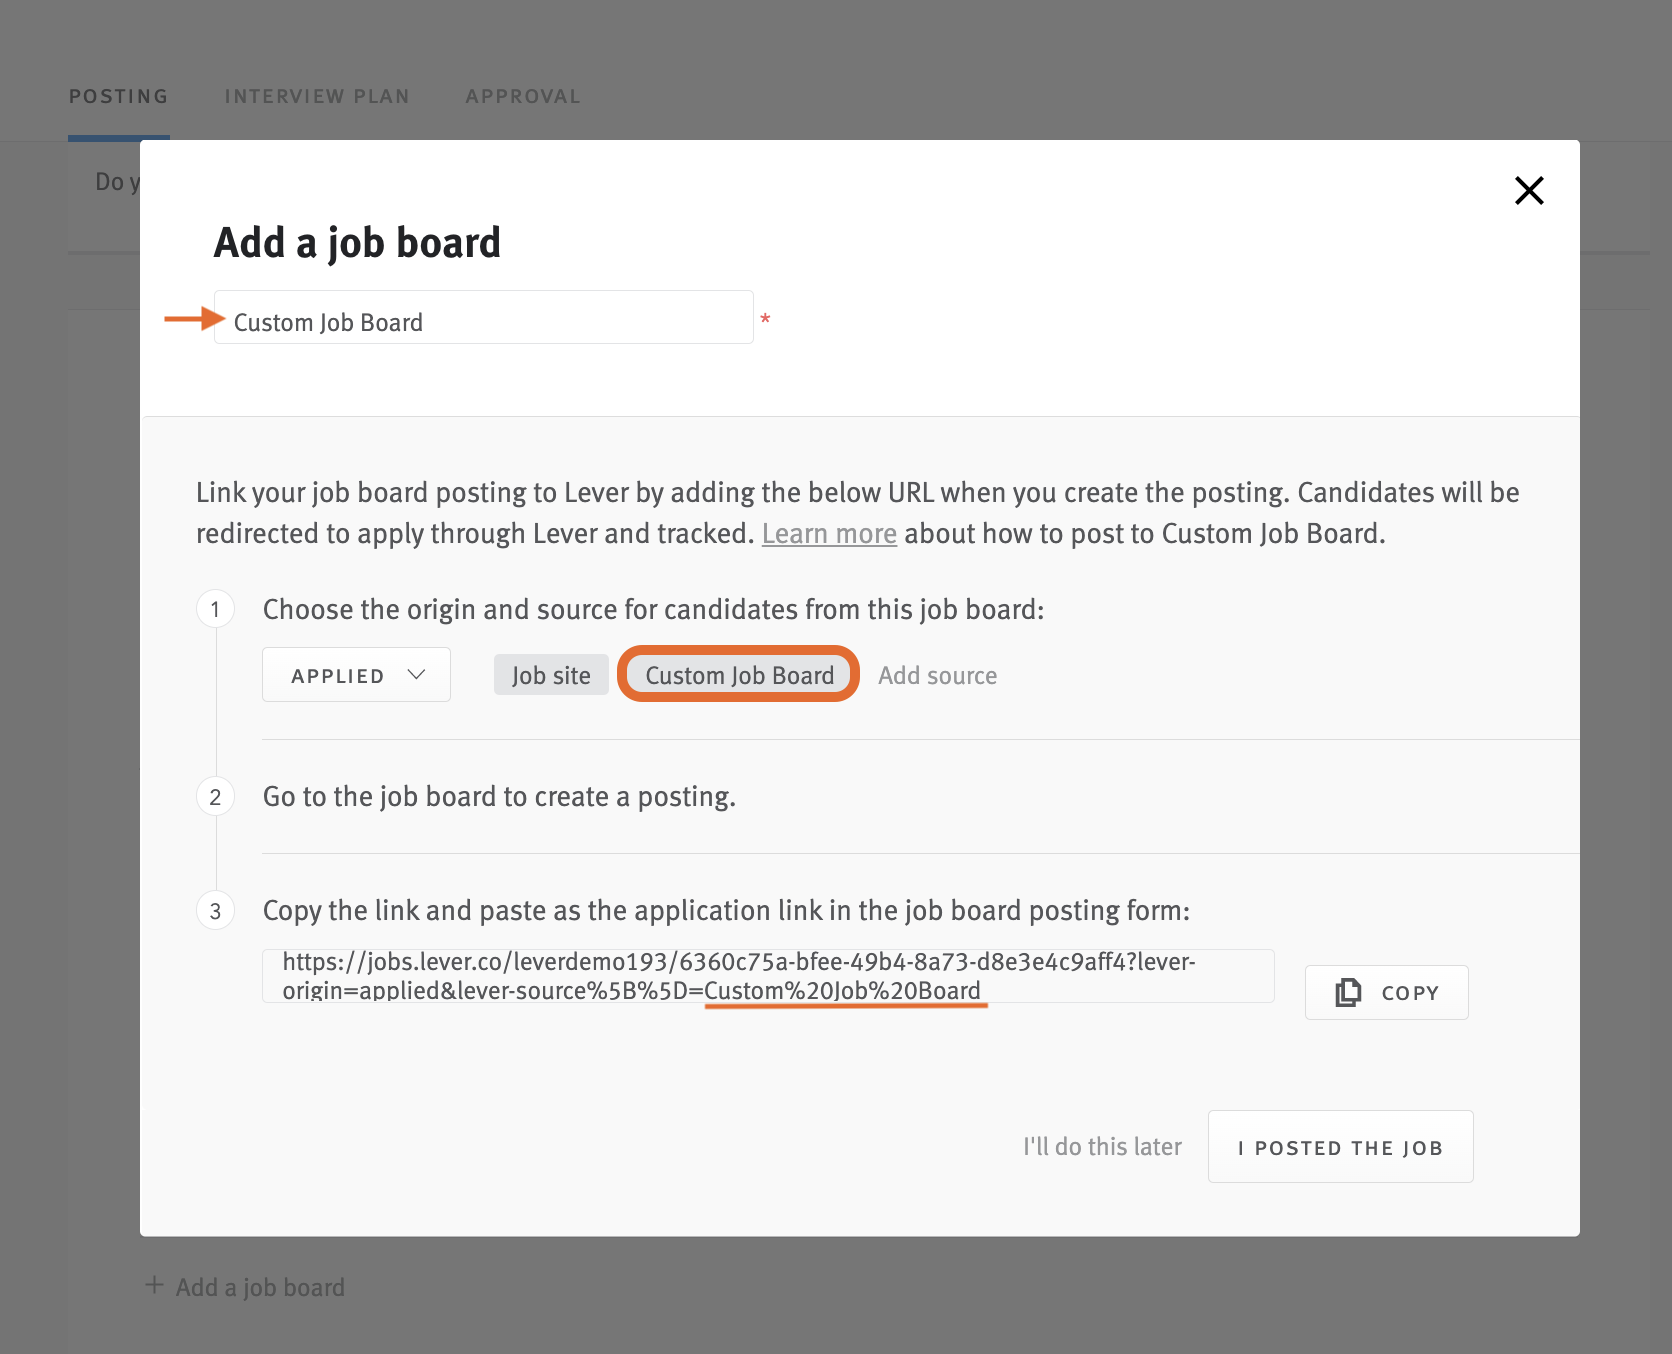 Add job board modal with arrow pointing job board title, custom job board source tag, and text in custom URL following 5D=.